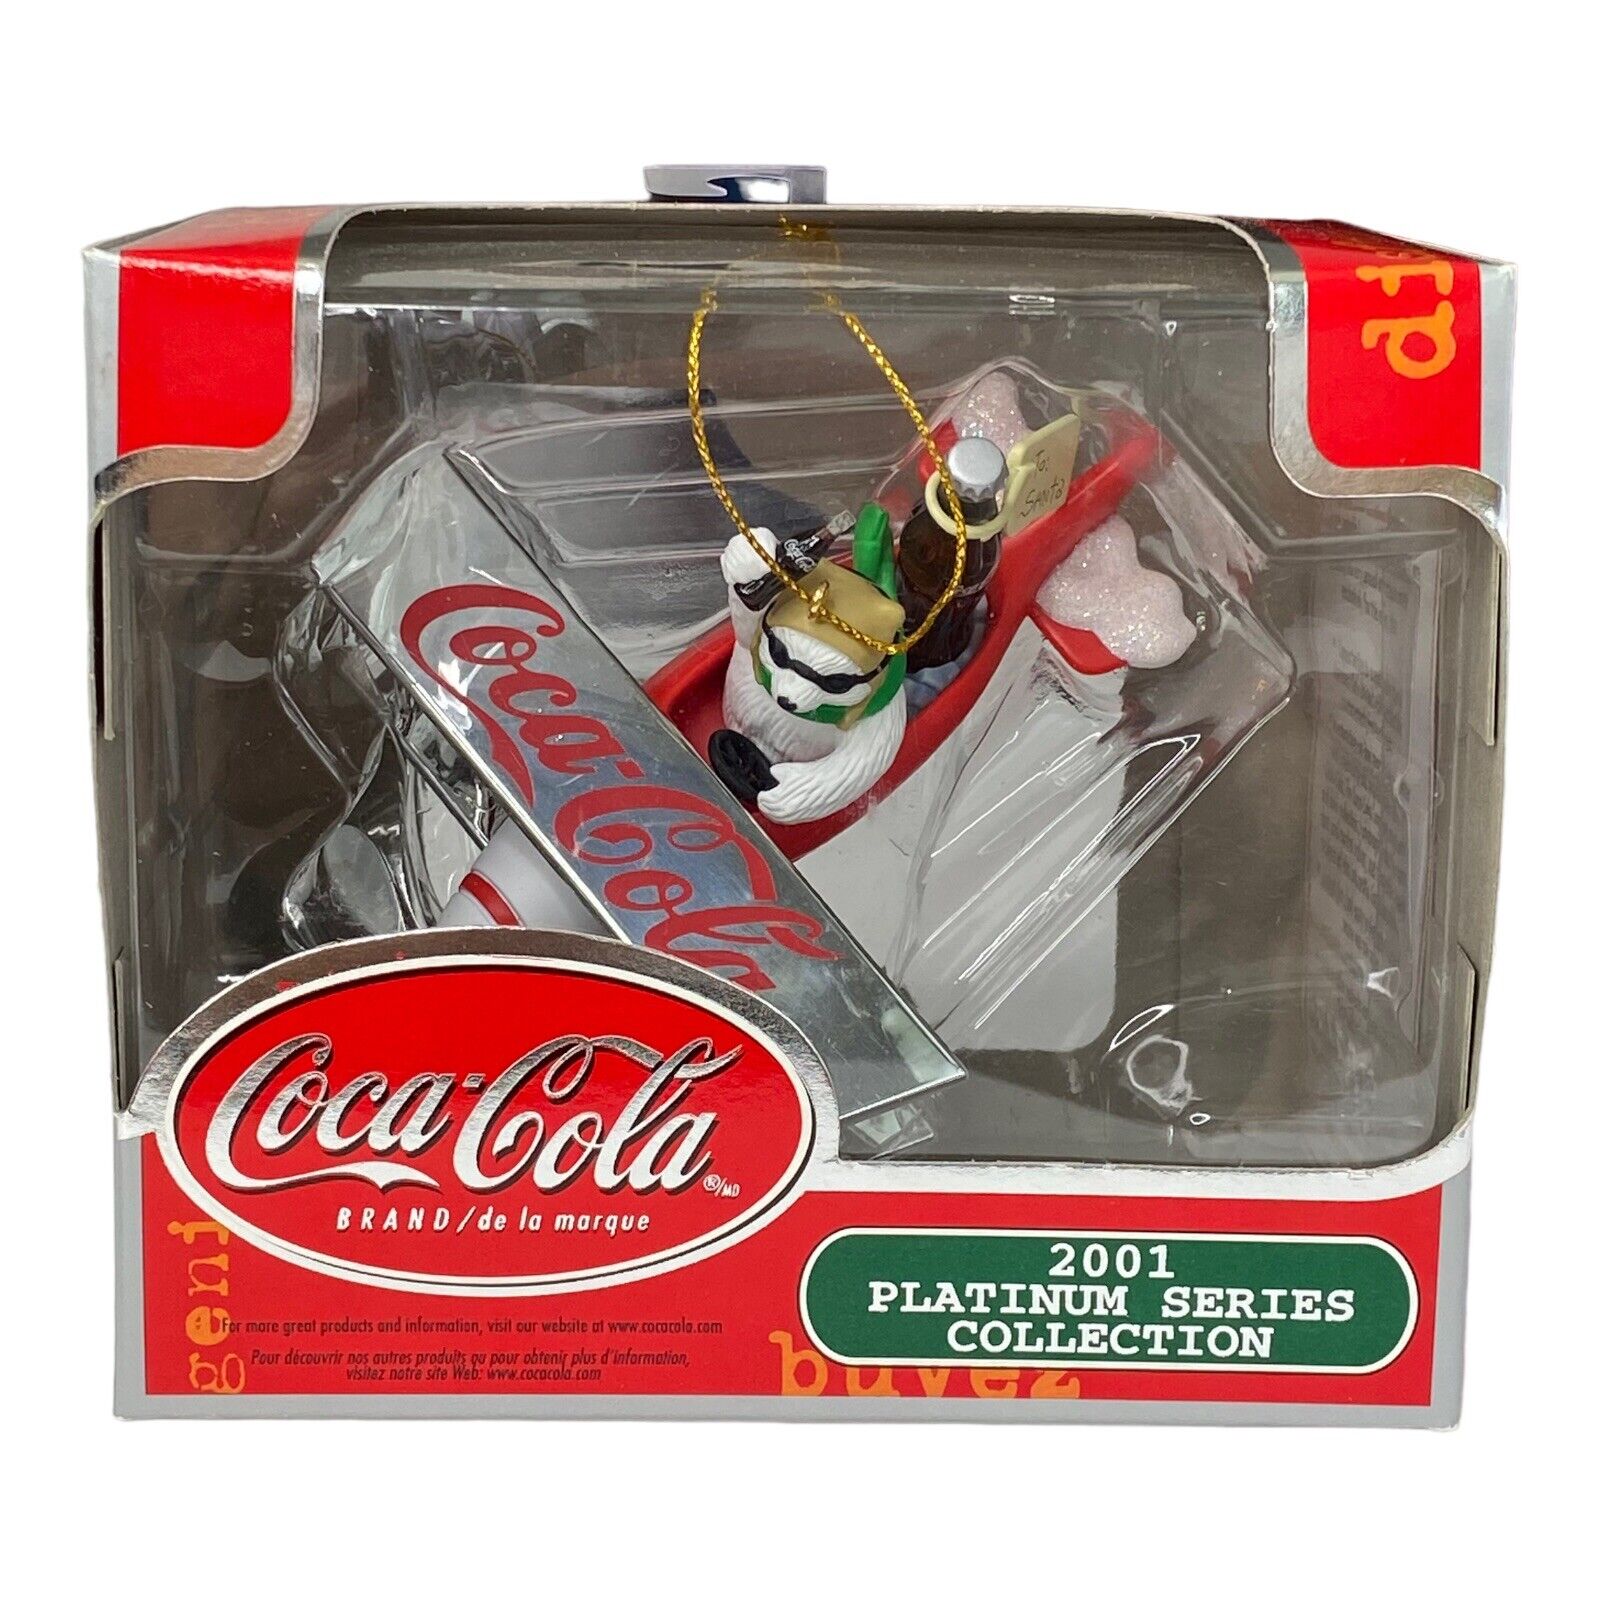 Coca-Cola 2001 Polar Bear Ornament Limited Edition Platinum Series Collection